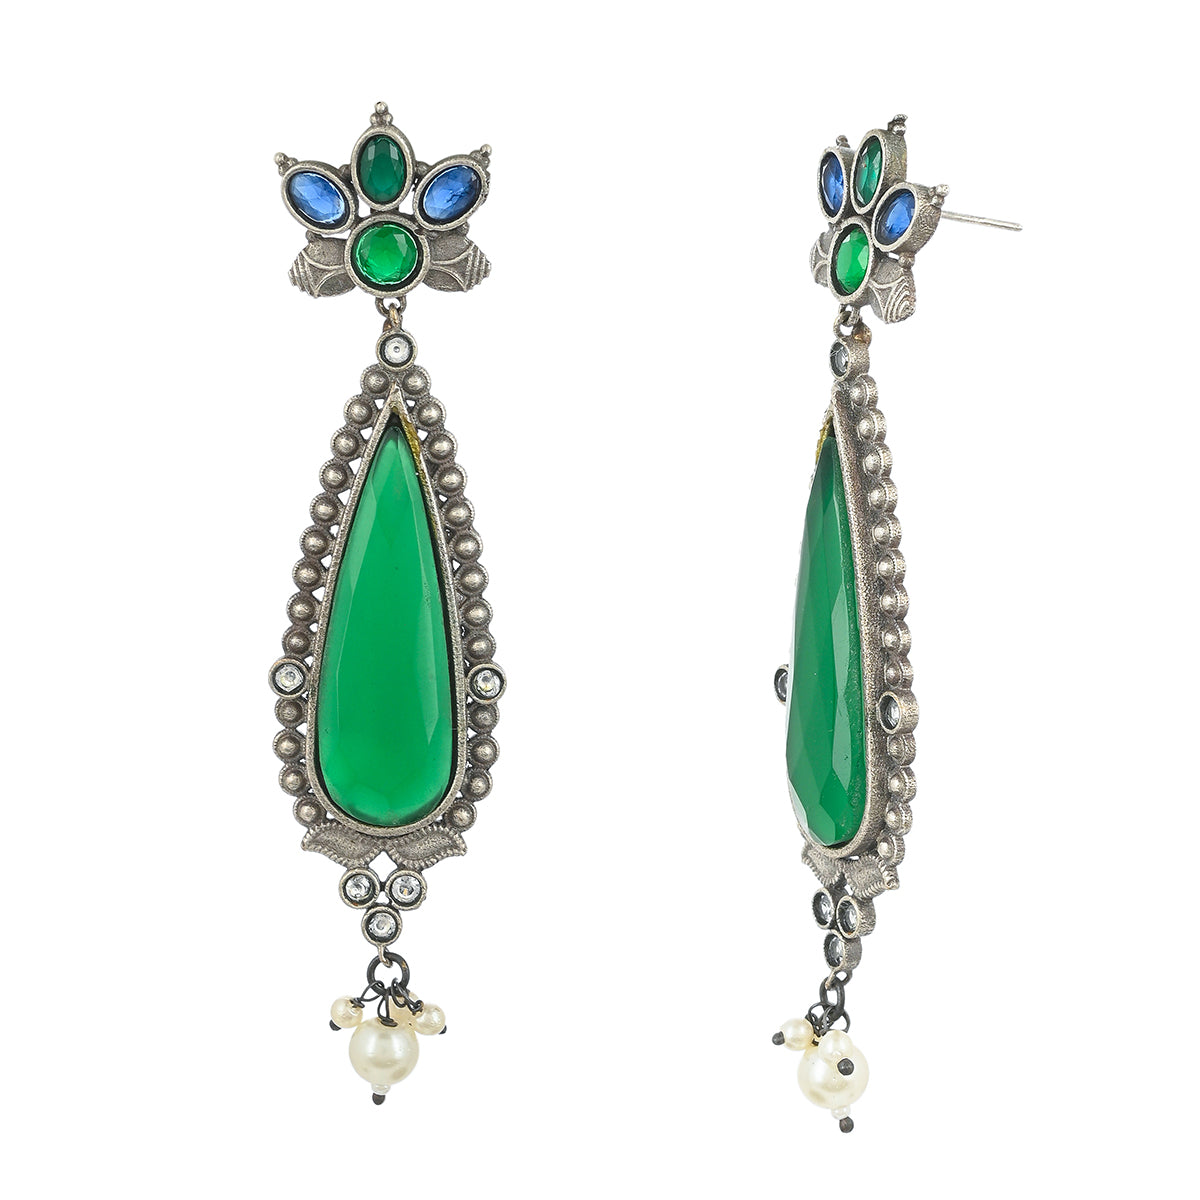 Antique Elegance Teardrop Green Gems and Faux Pearls Silver Plated Brass Earrings